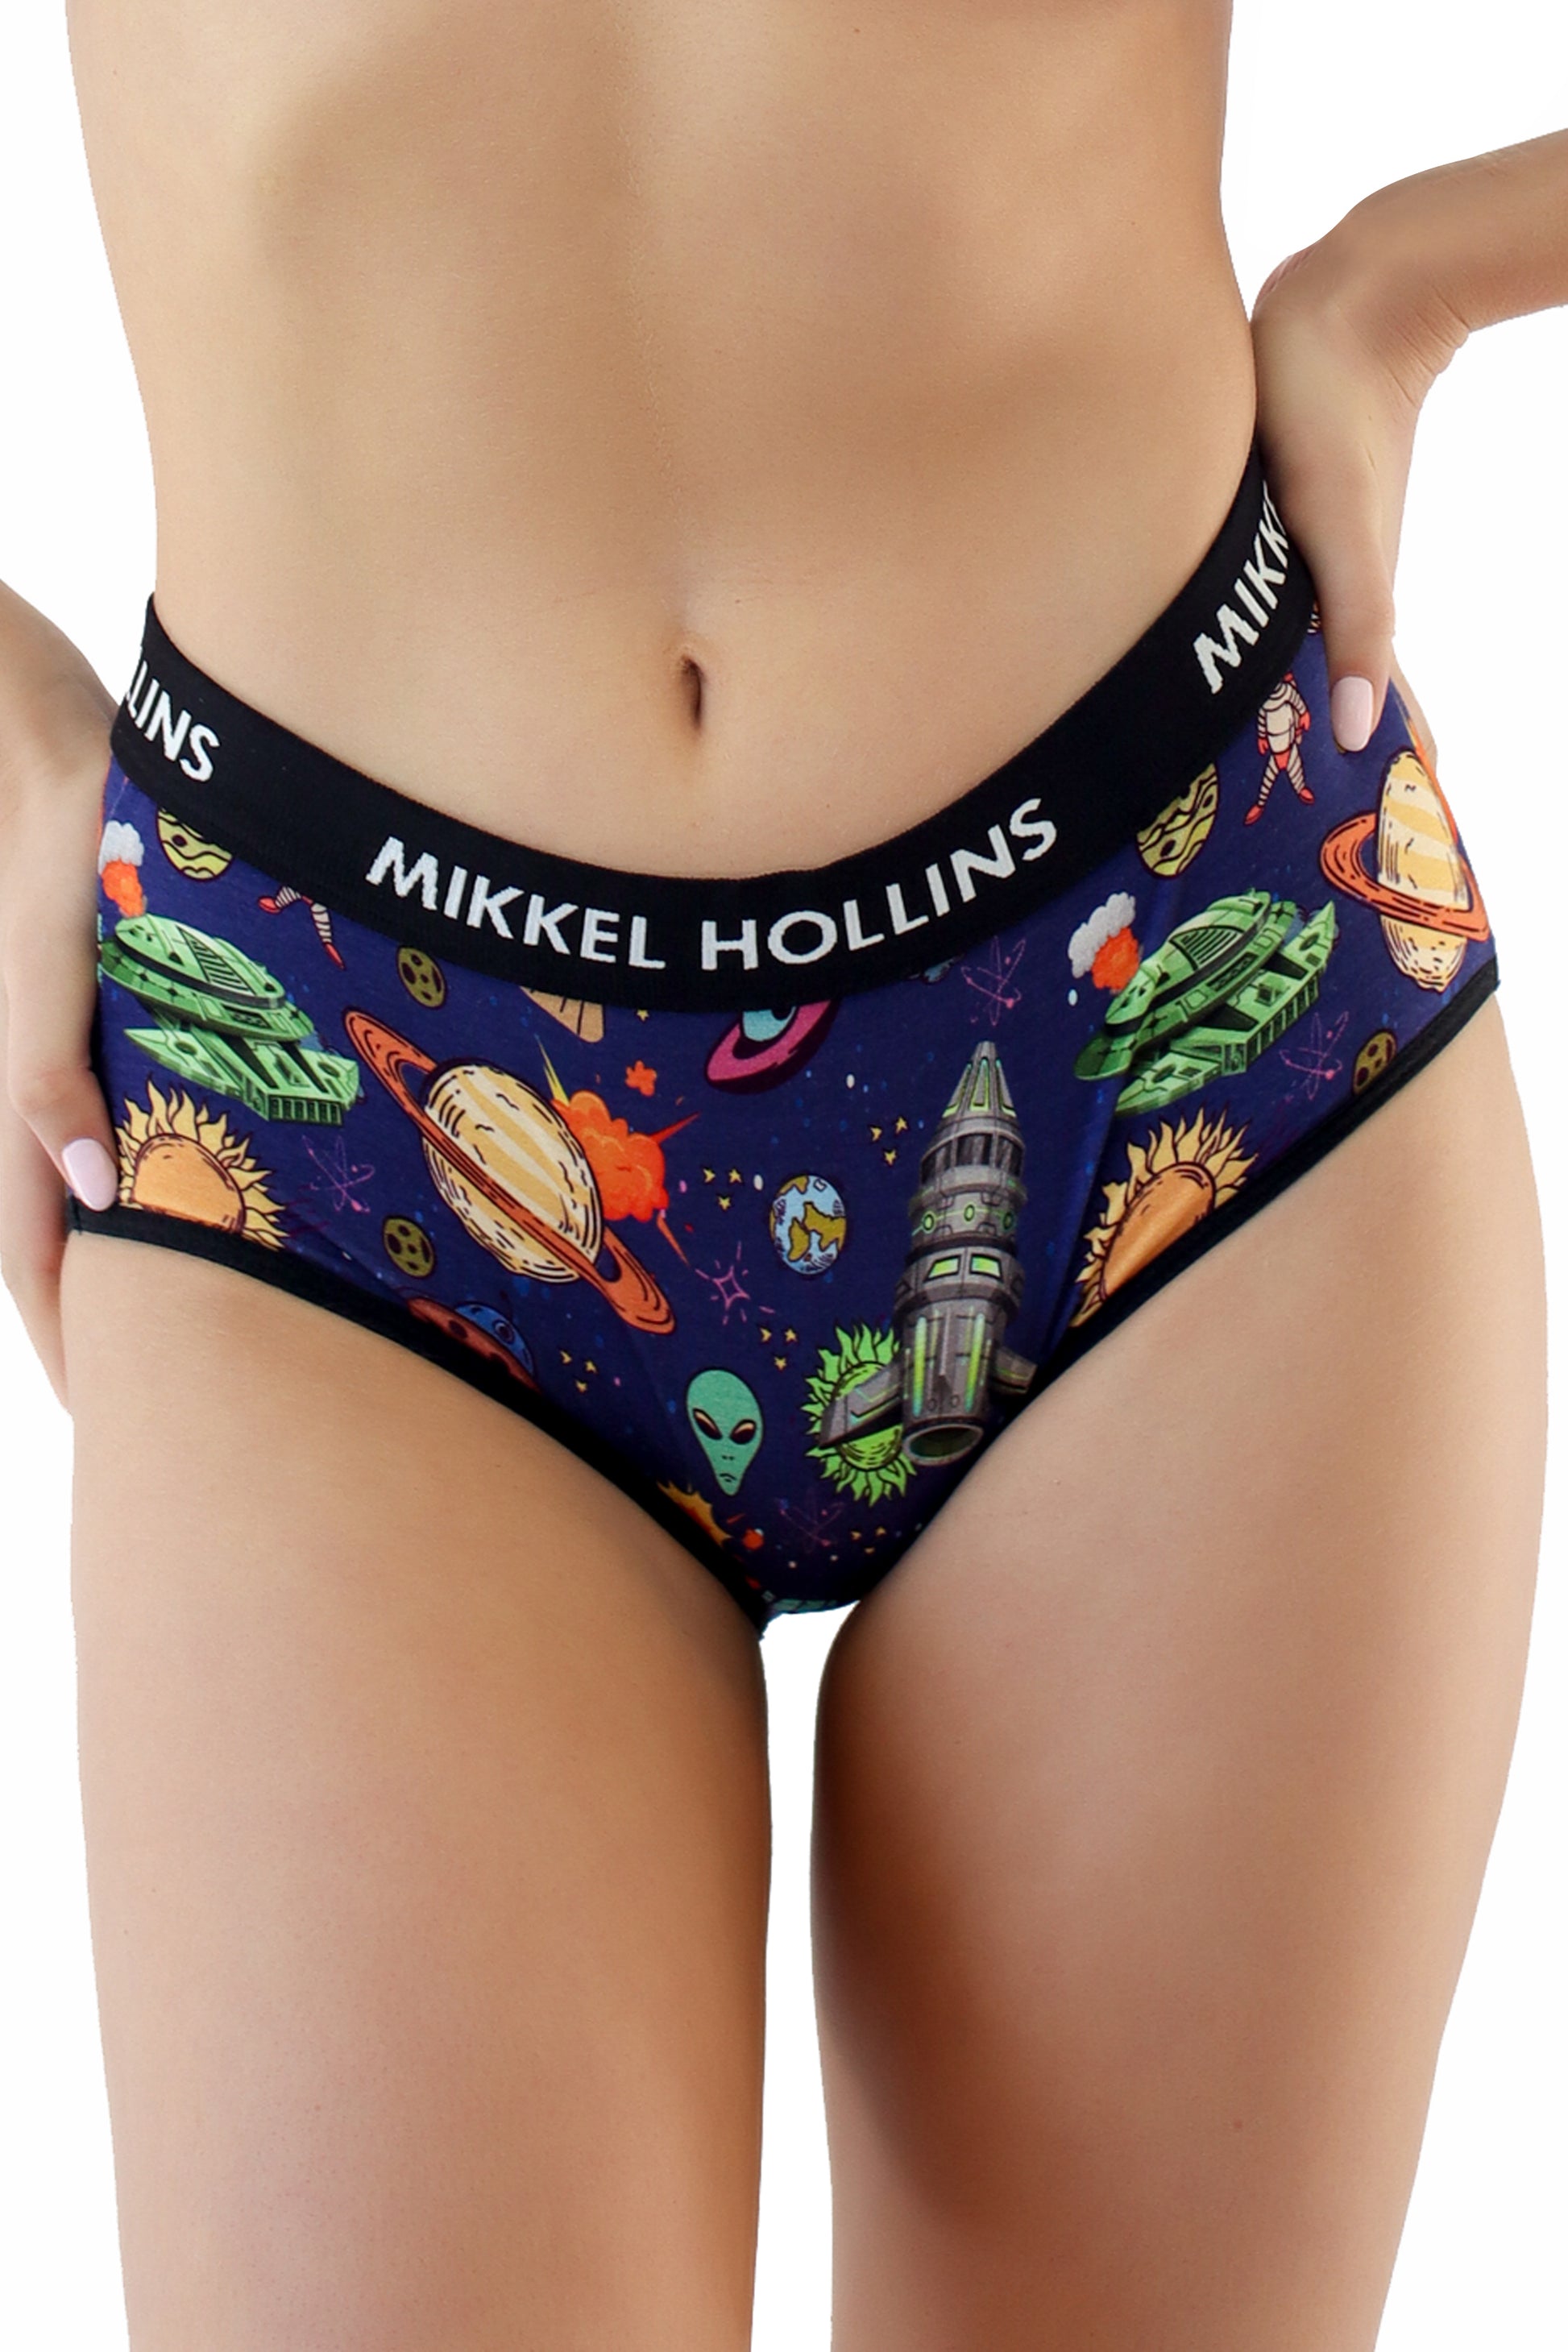 Couples Matching Underwear Collection – Mikkel Hollins